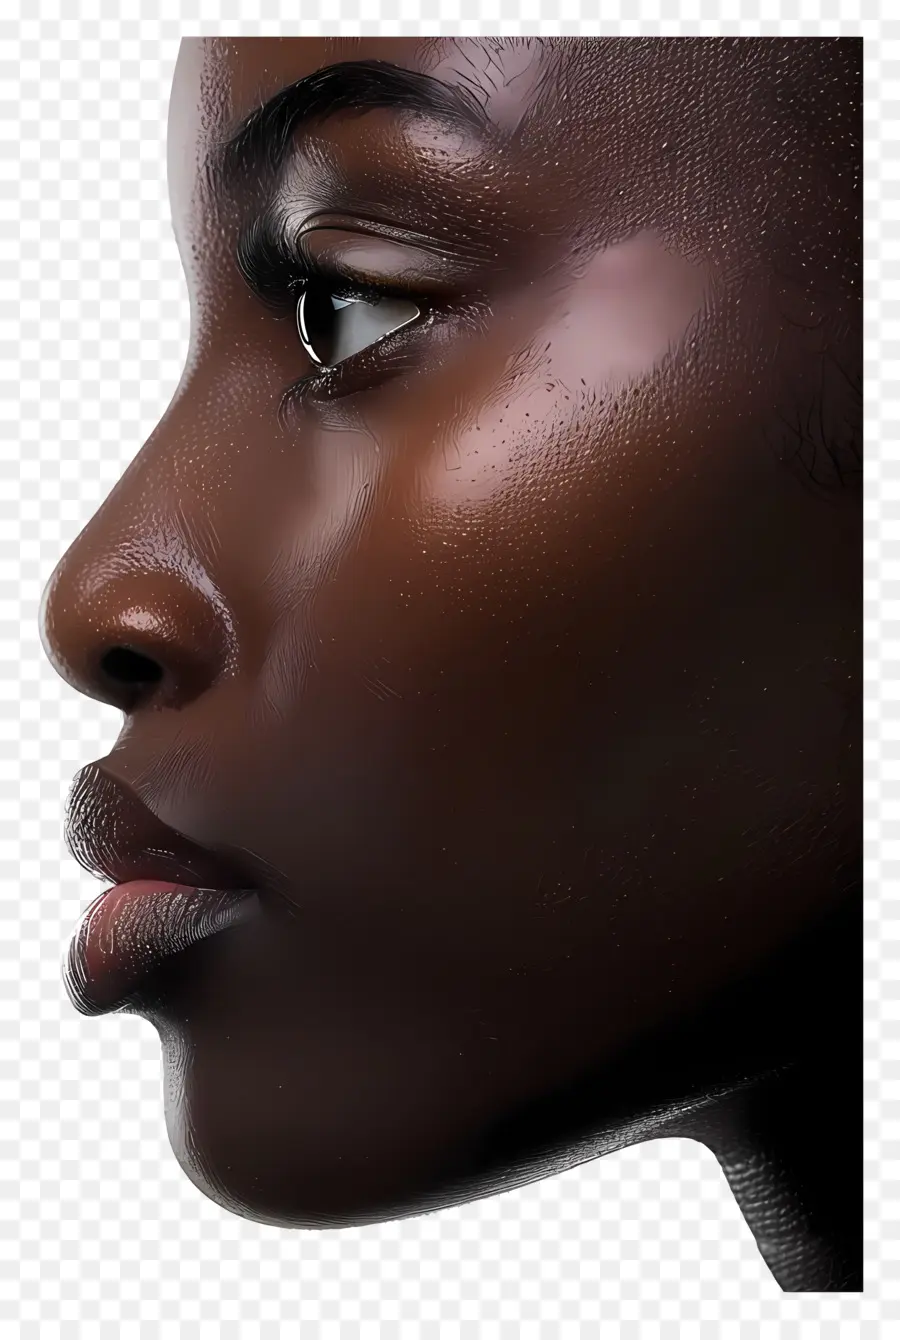 black woman face black woman introspection calmness smooth skin